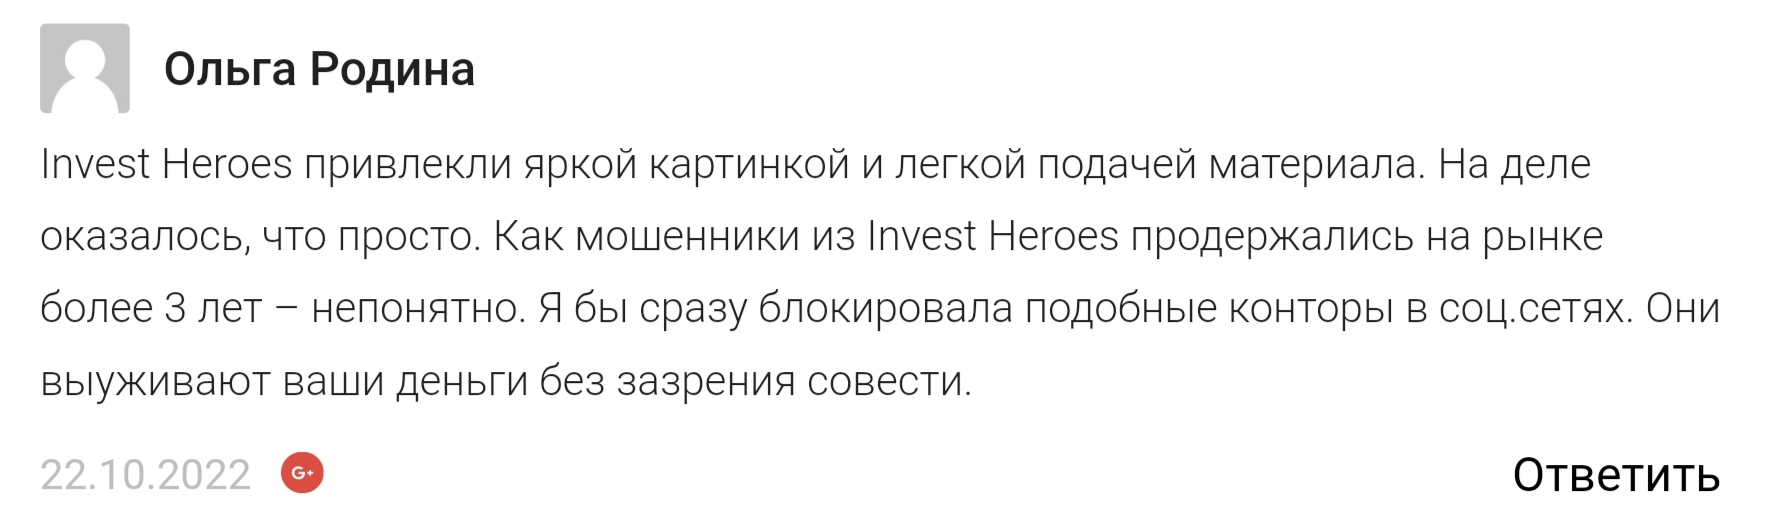 Invest Heroes отзывы